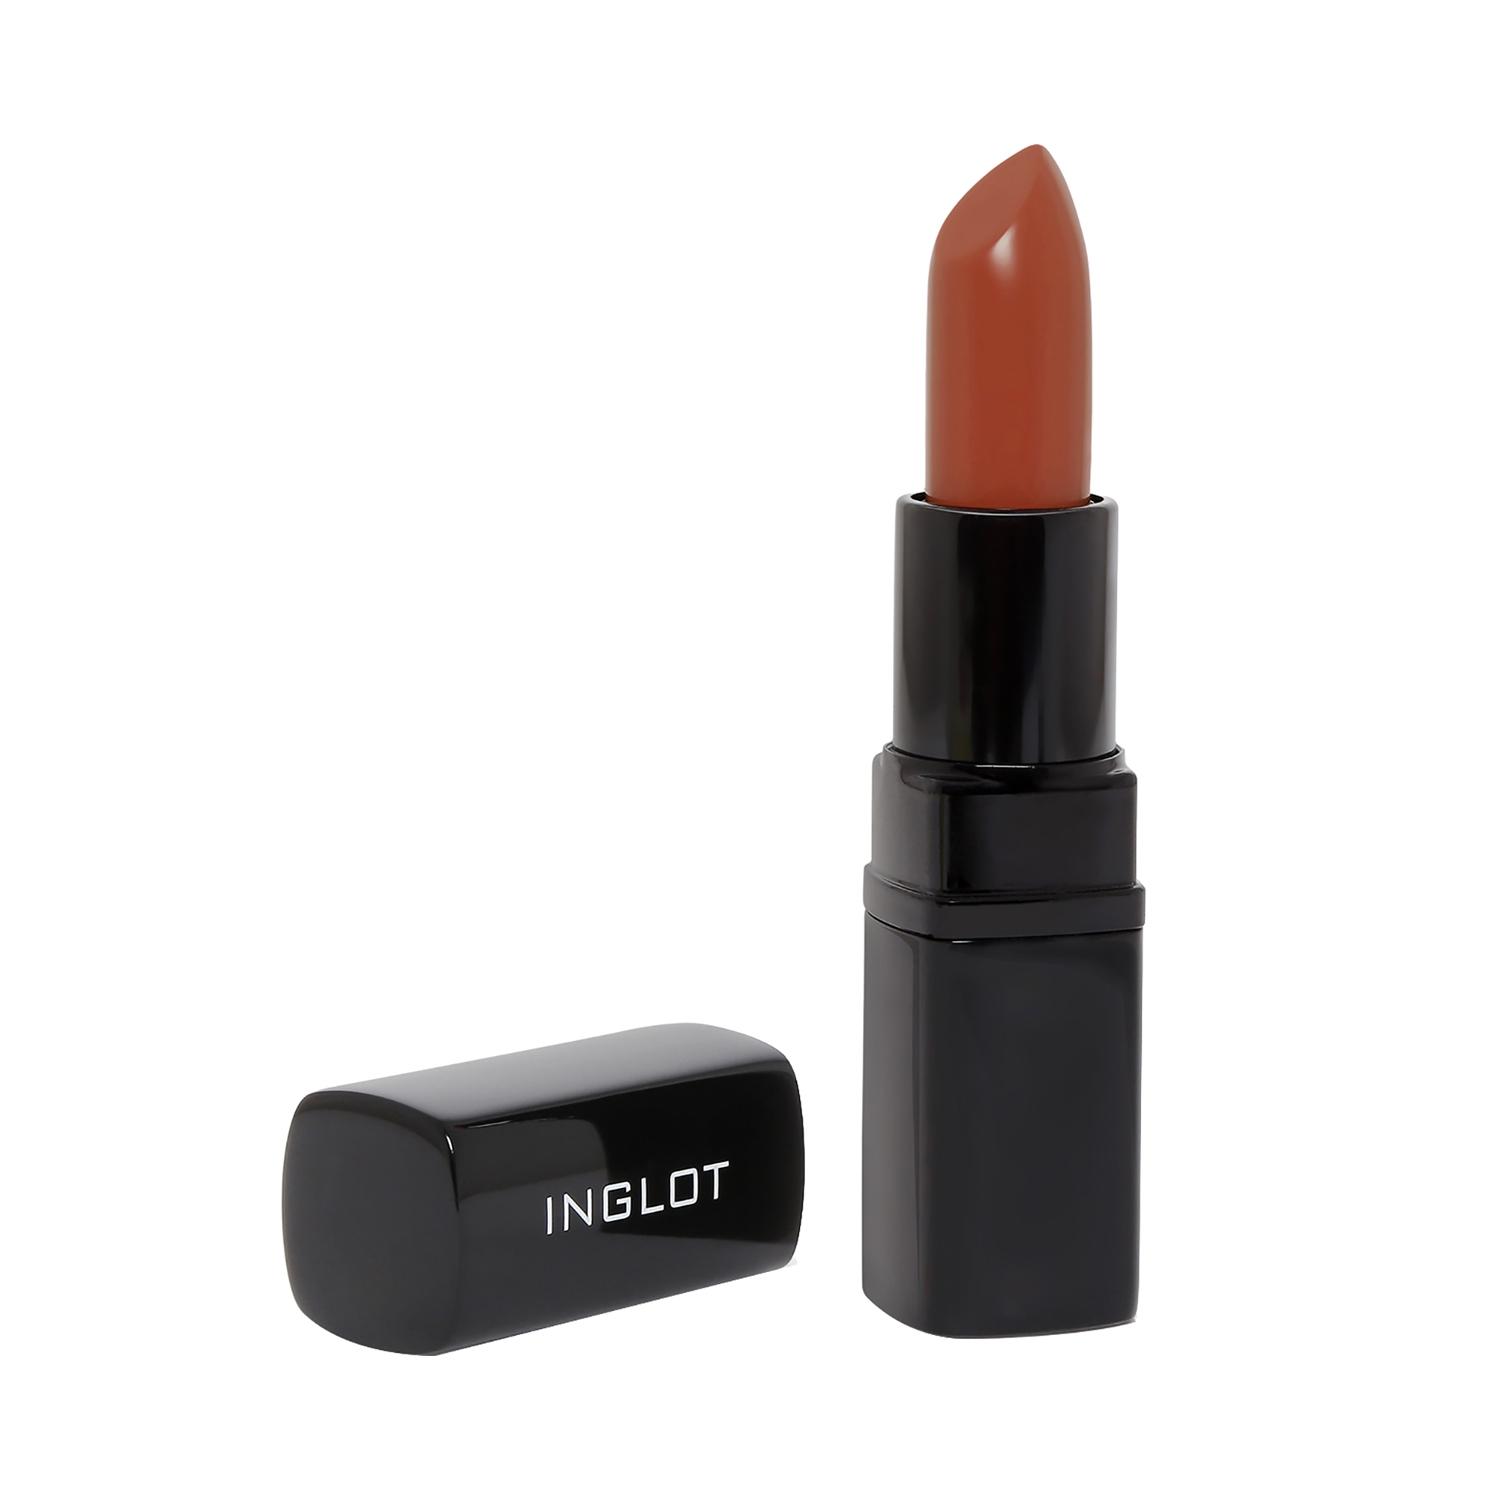 inglot matte lipstick - 445 (4.5g)